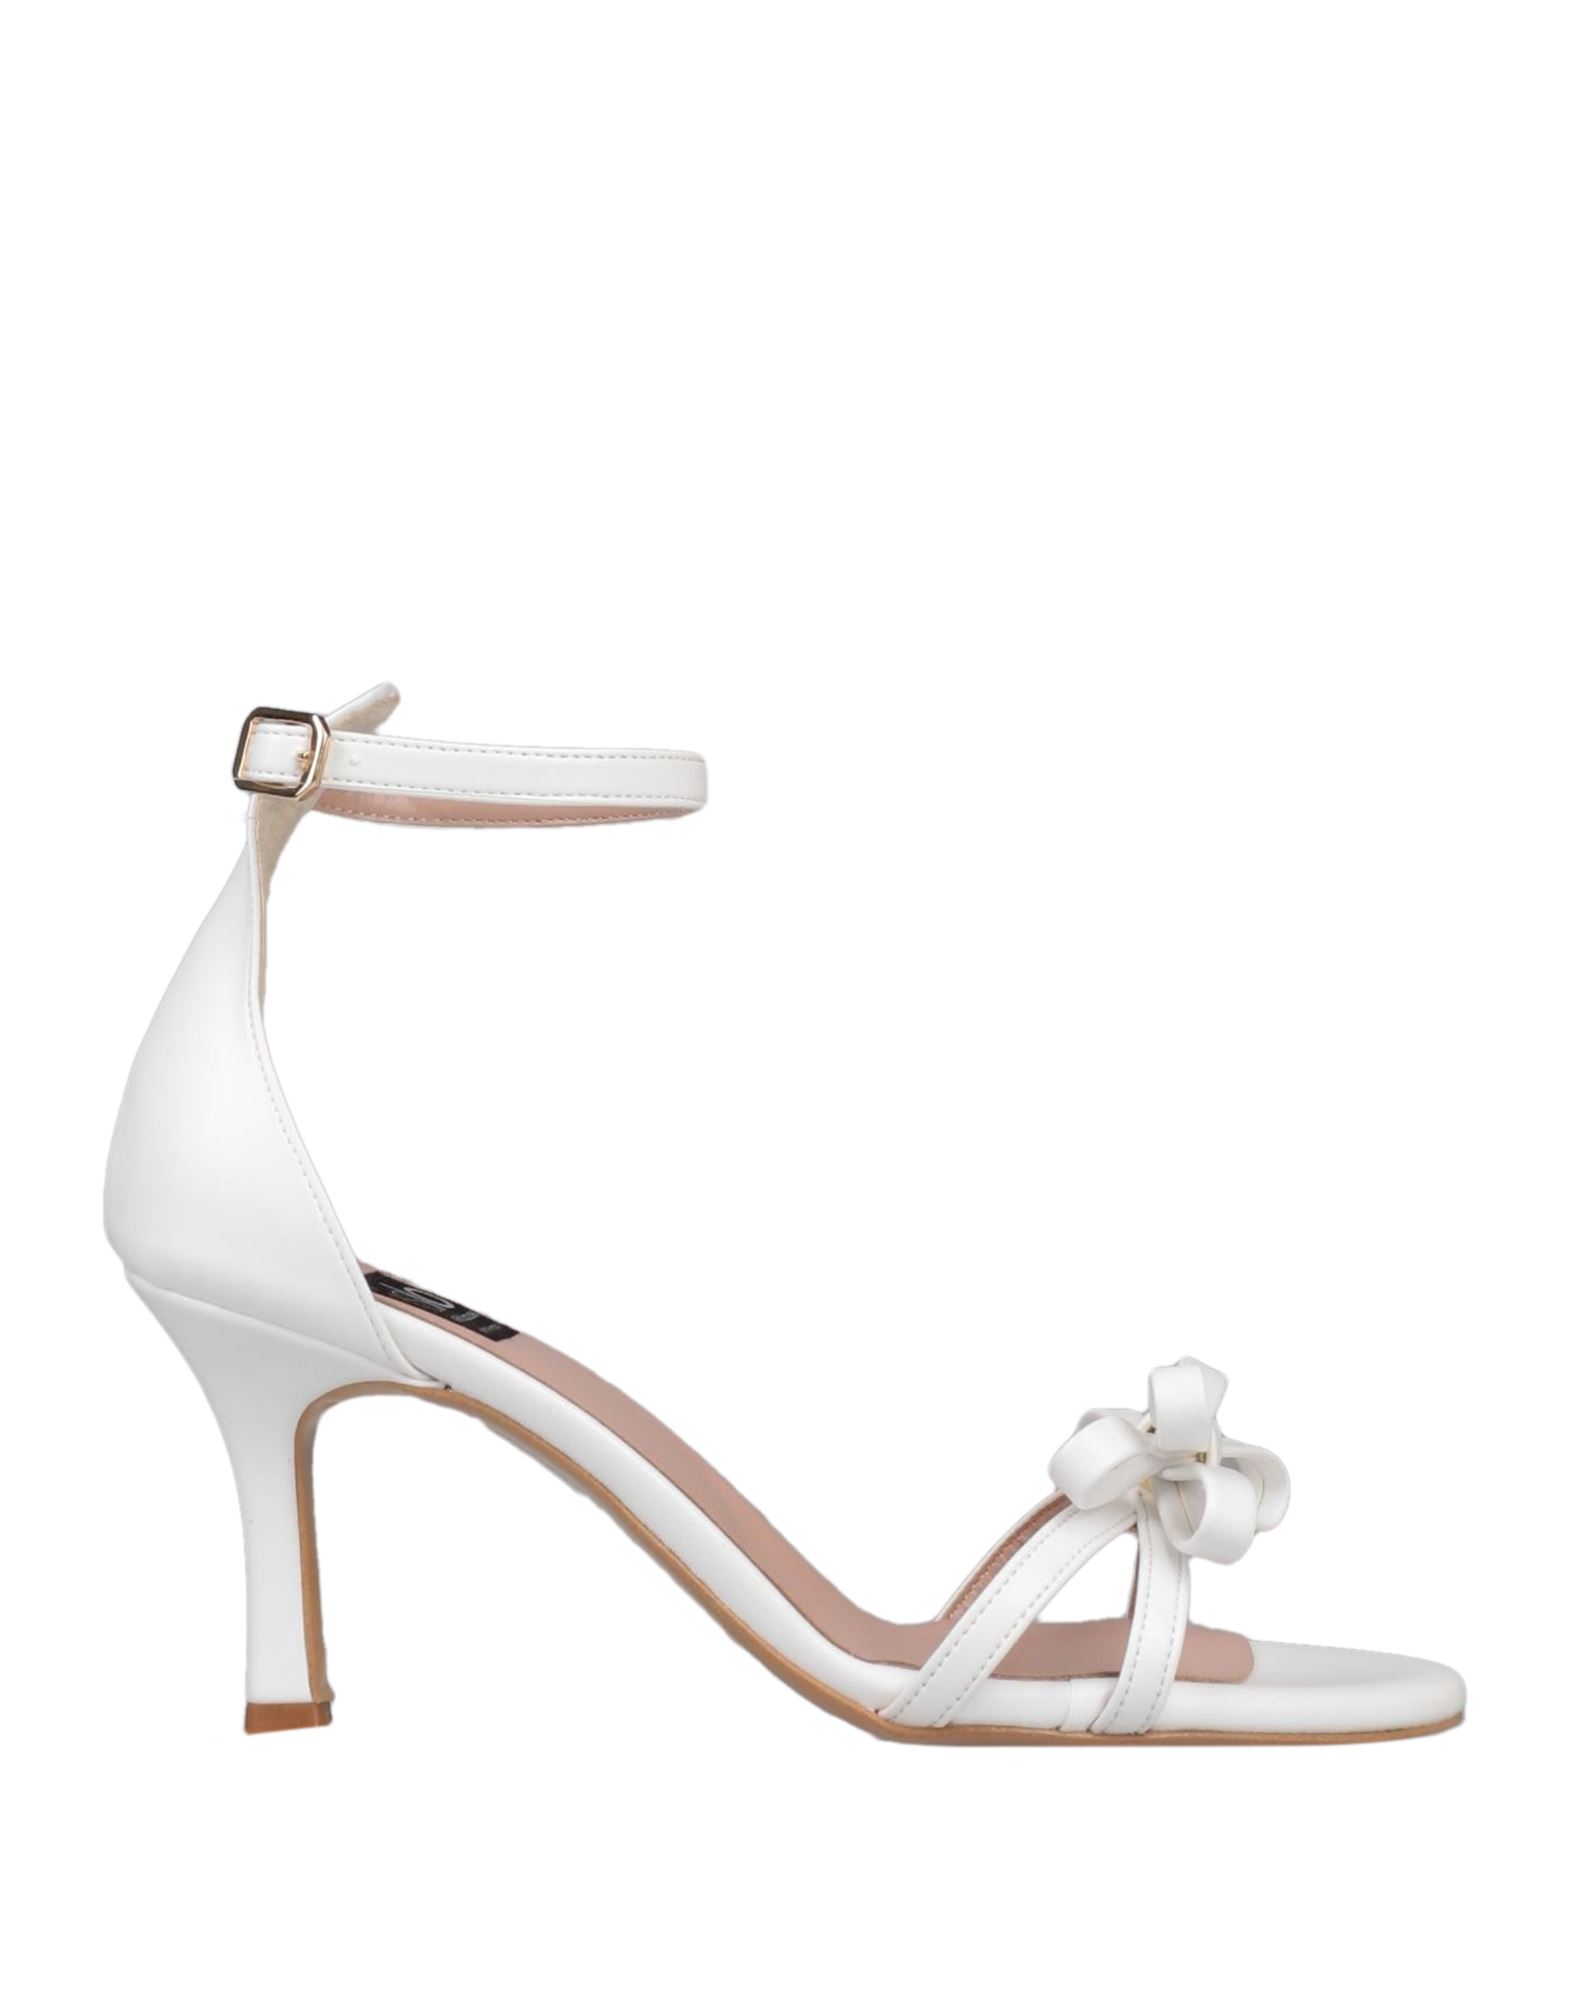 Islo Isabella Lorusso Sandals In White